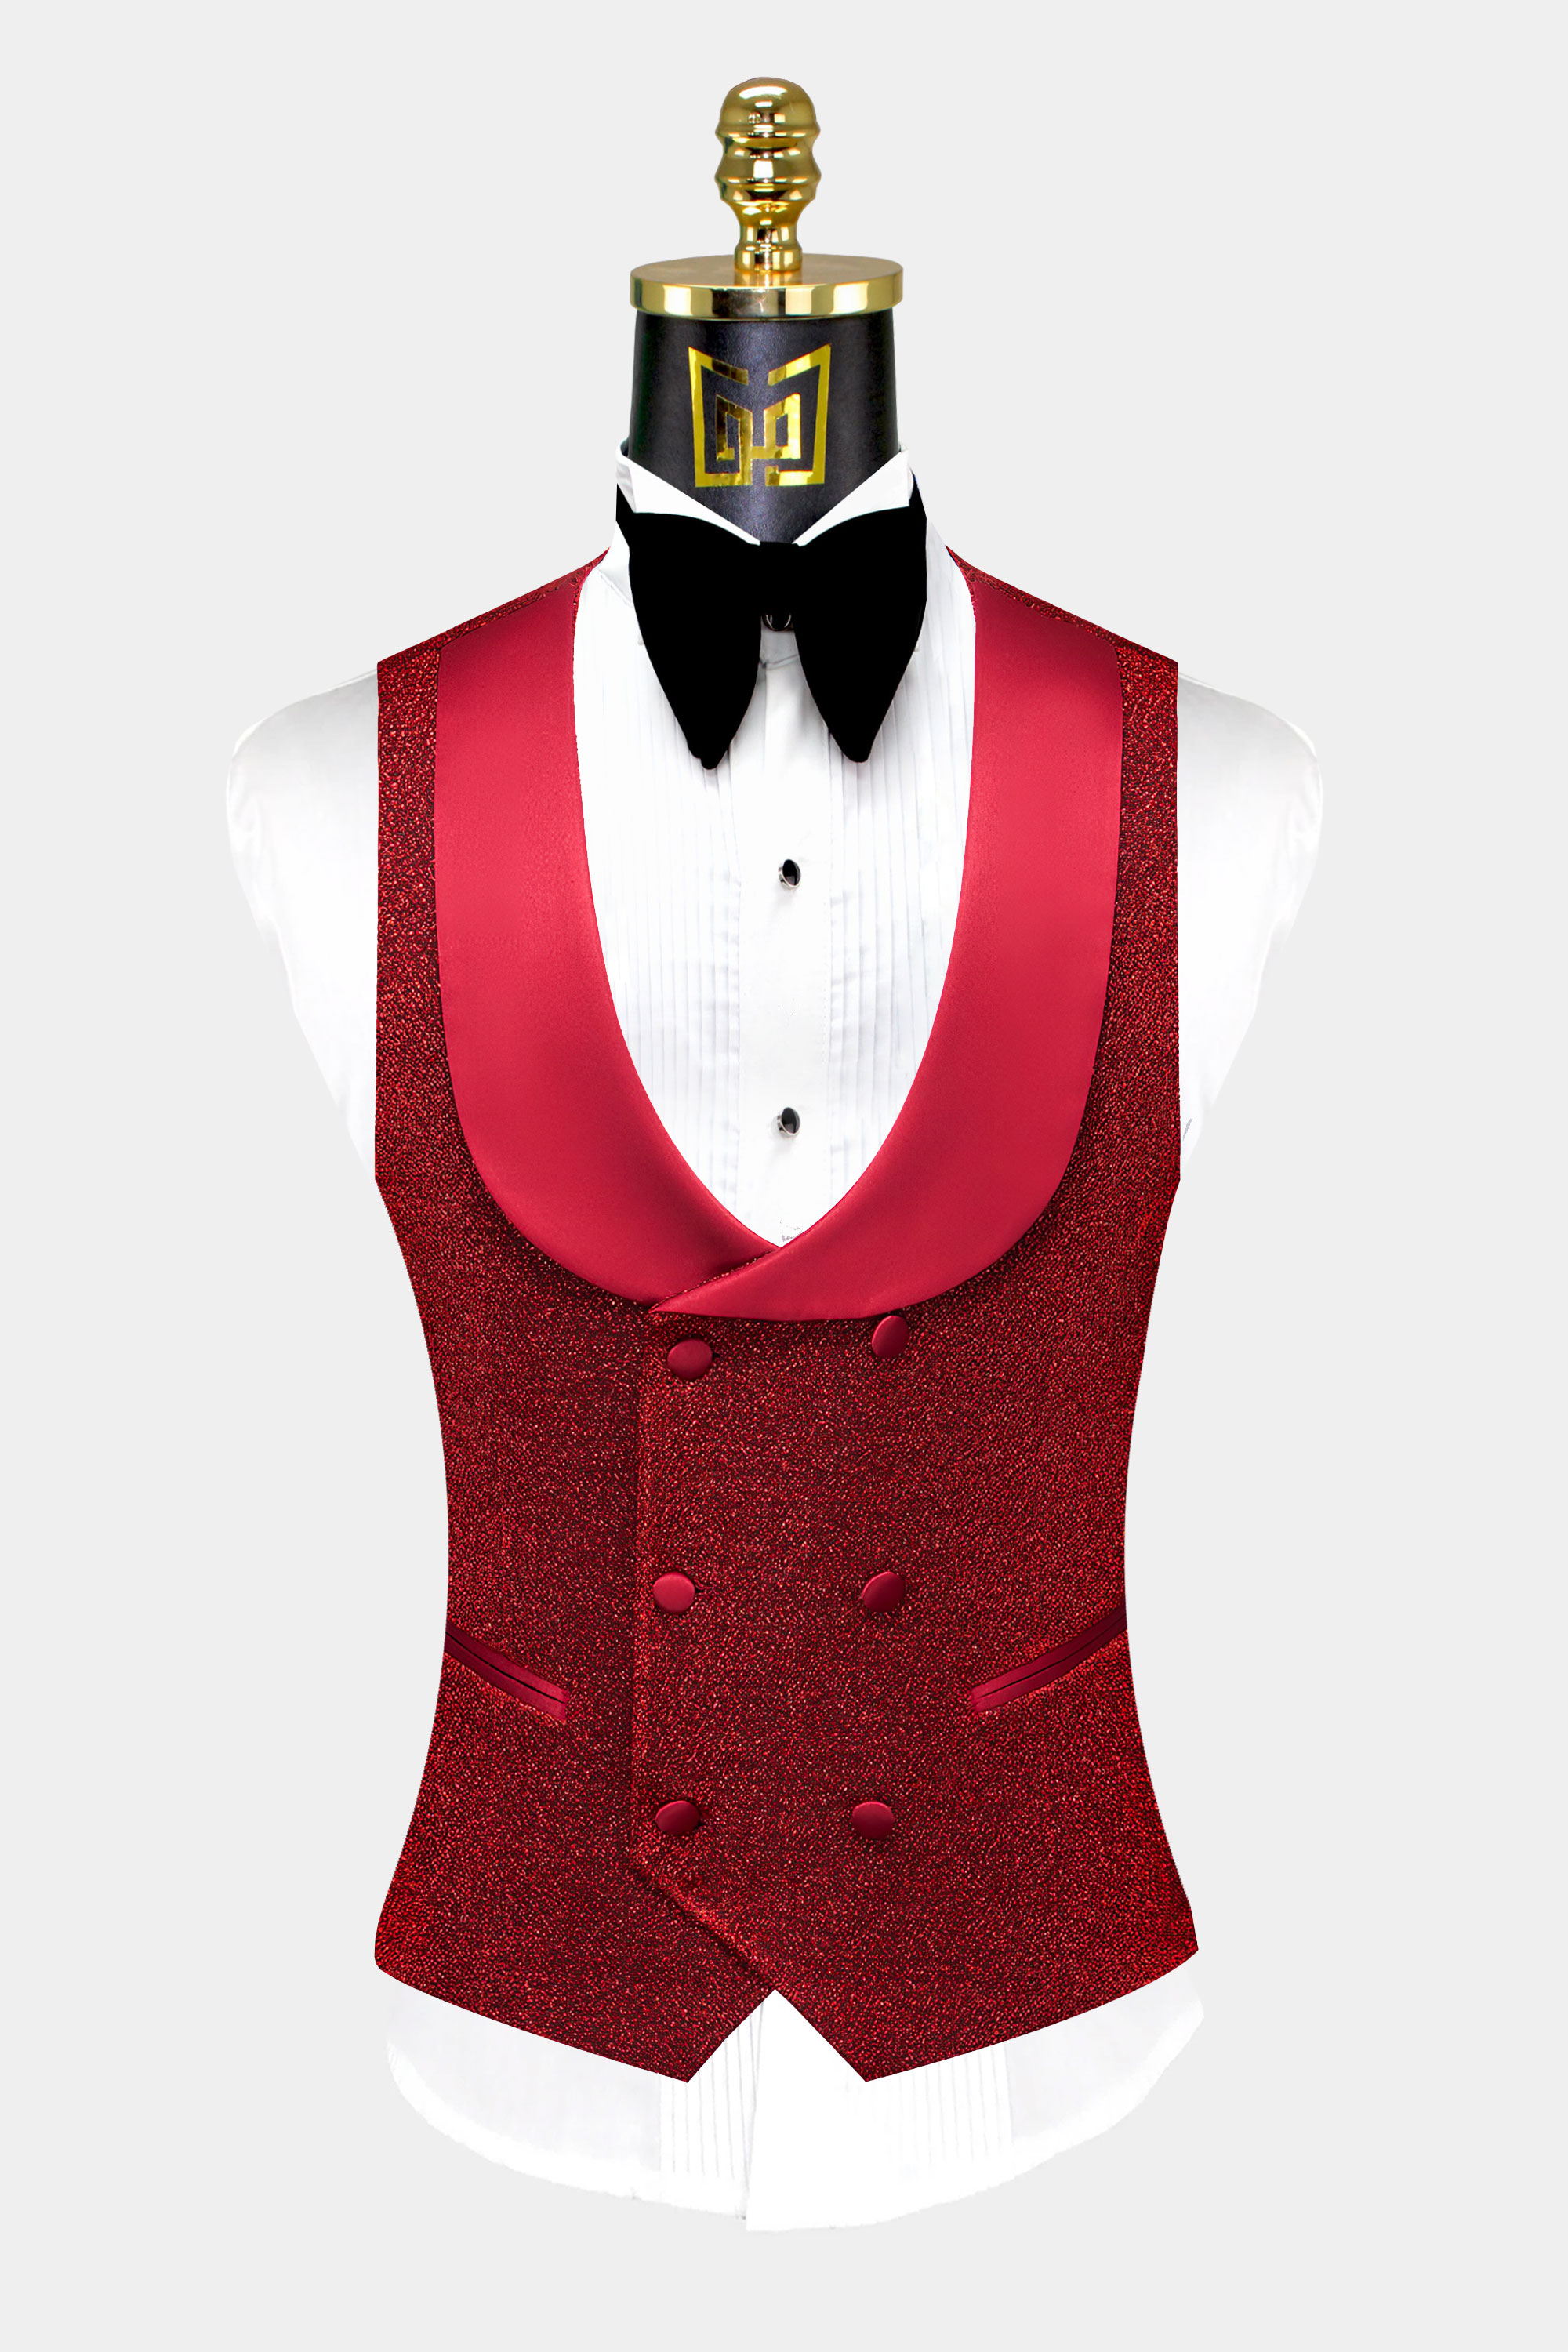 Double-Breasted-Red-Glitter-Tuxedo-Vest-from-Gentlemansguru.com